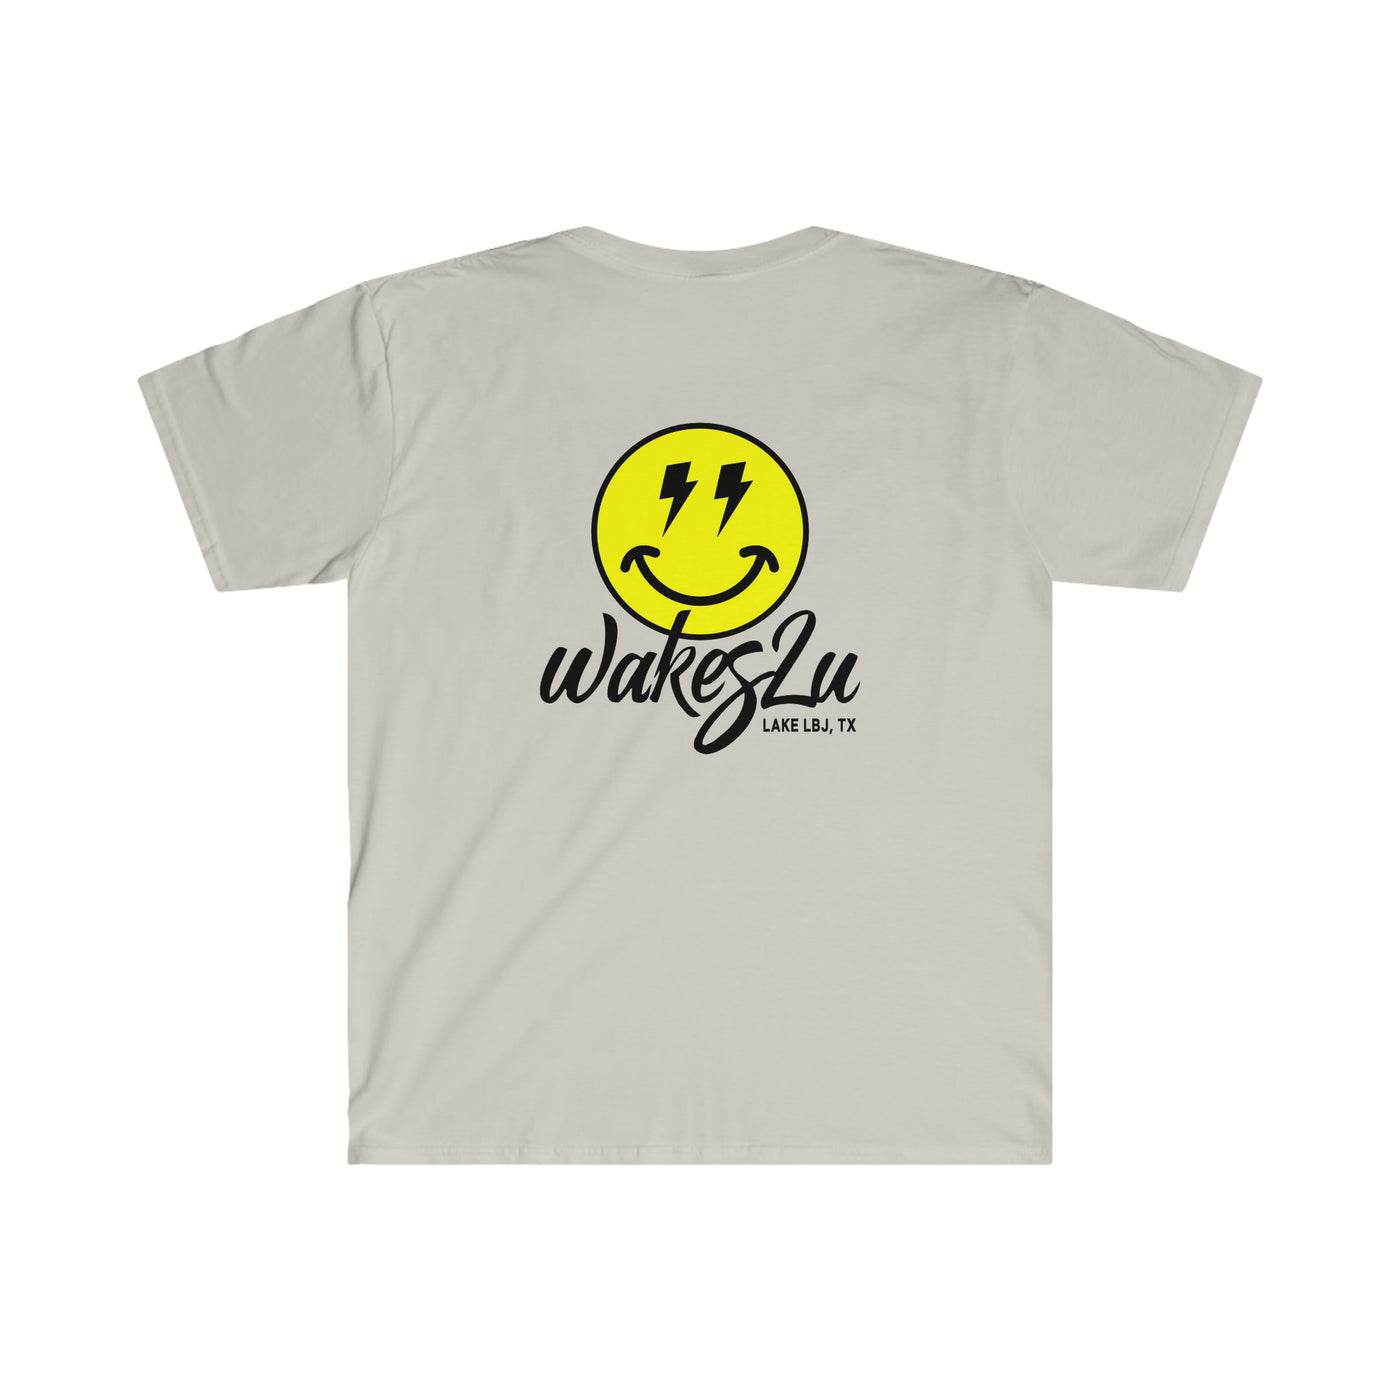 Wakes2u "lightning smiley"  T-Shirt